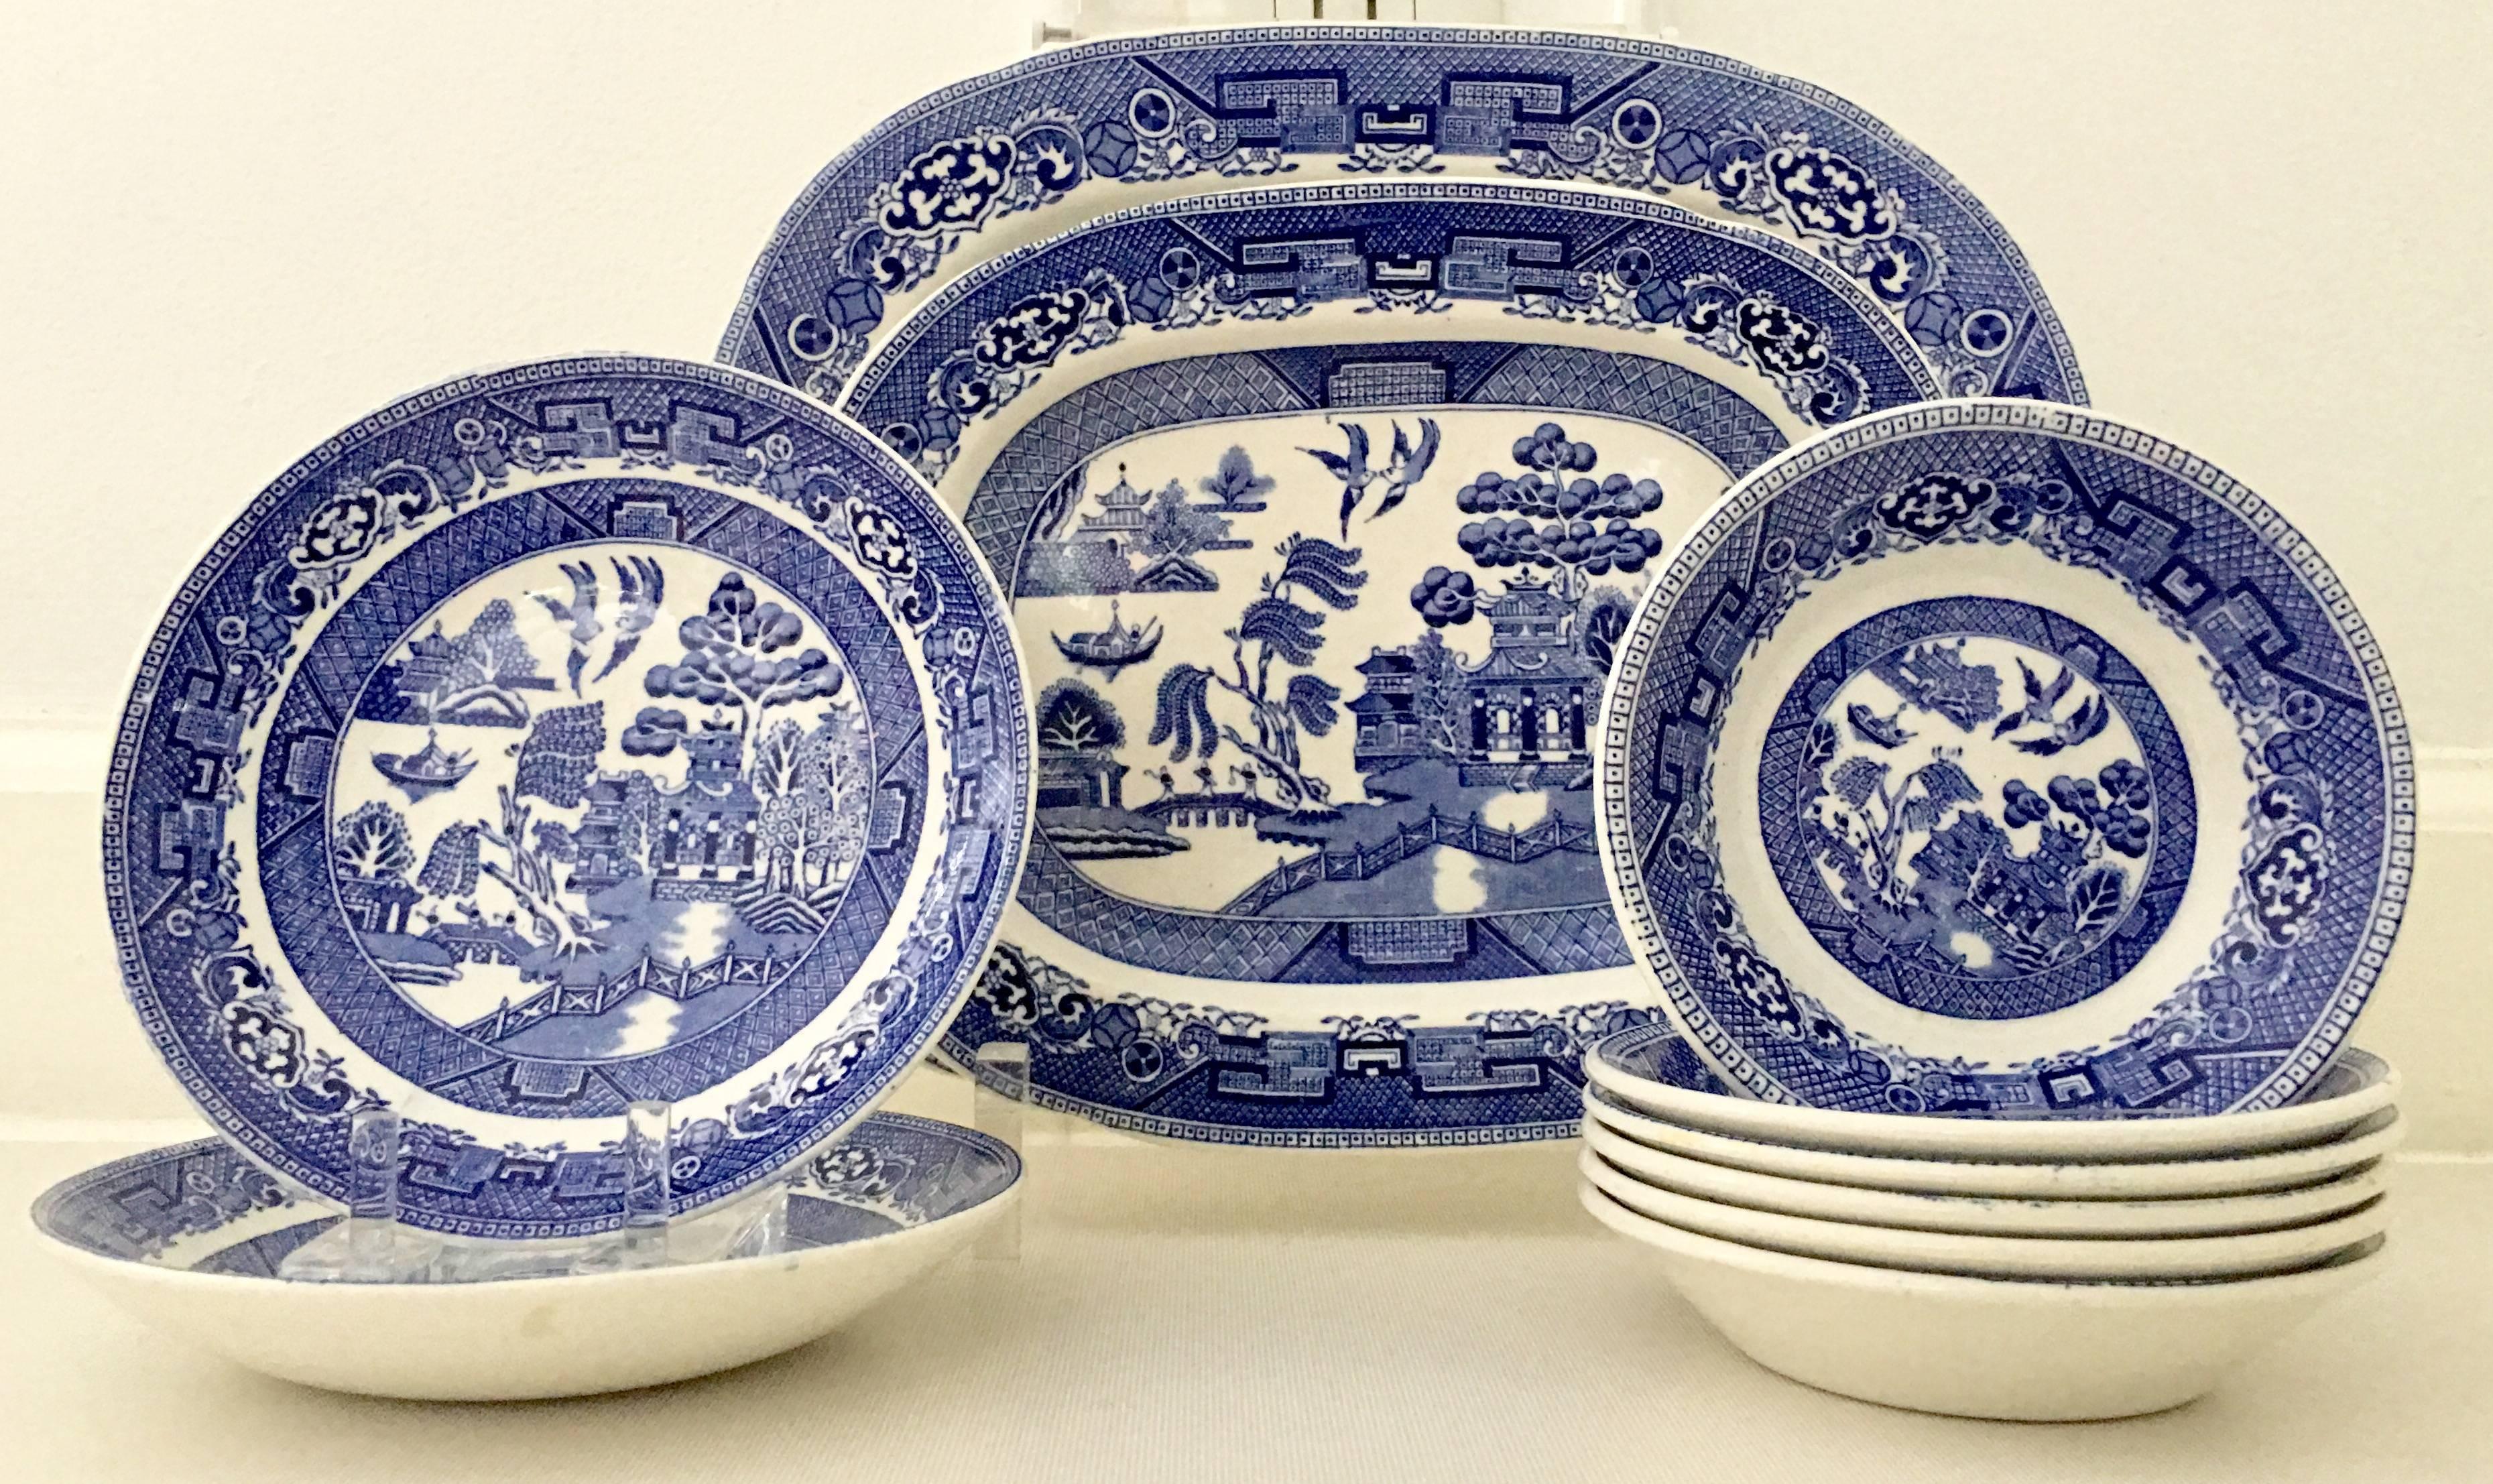 Vintage English-ridgeways ceramic dinnerware in the 